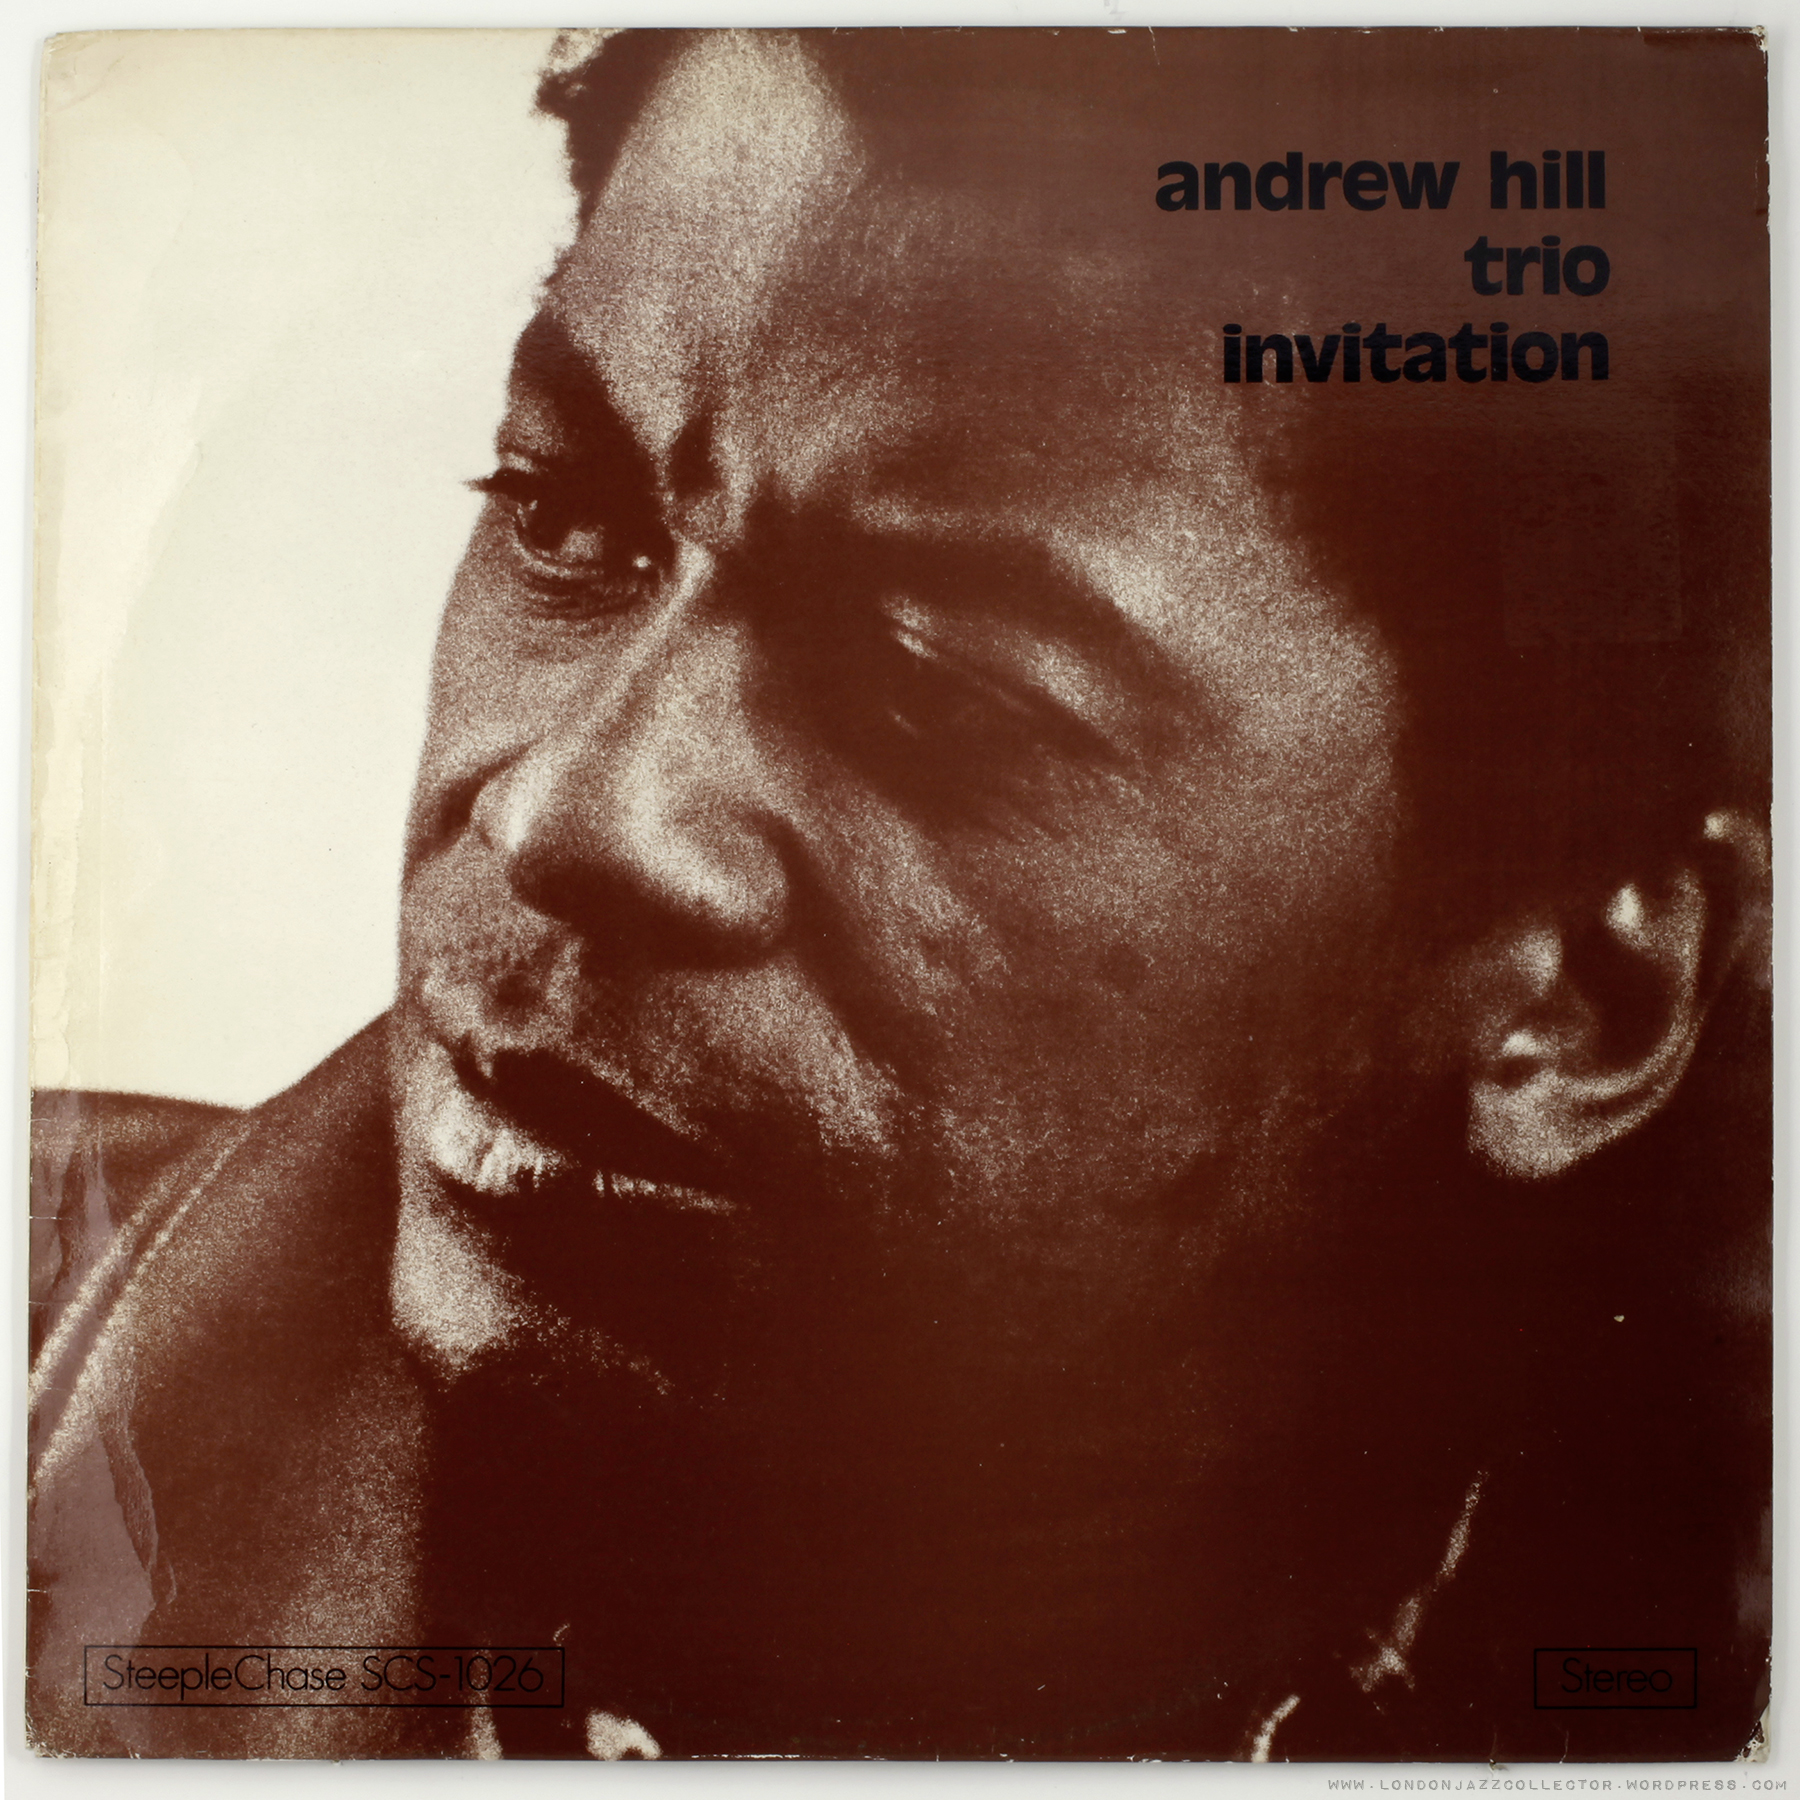 <b>Andrew-Hill</b>-Invitation-1974-frontcover-1800-LJC - andrew-hill-invitation-1974-frontcover-1800-ljc1